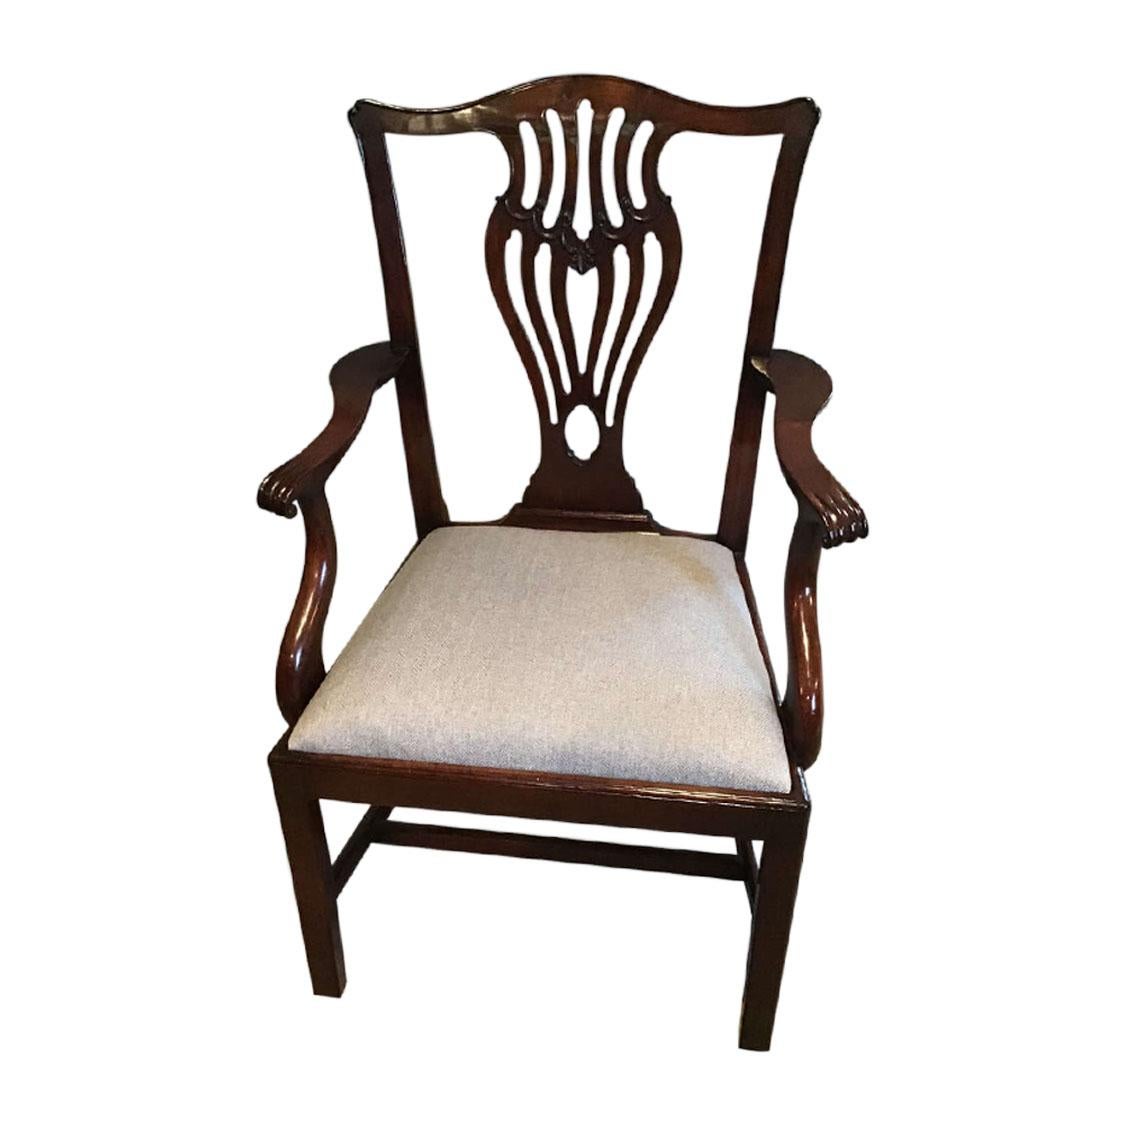 Antique English mahogany Elbow chair.